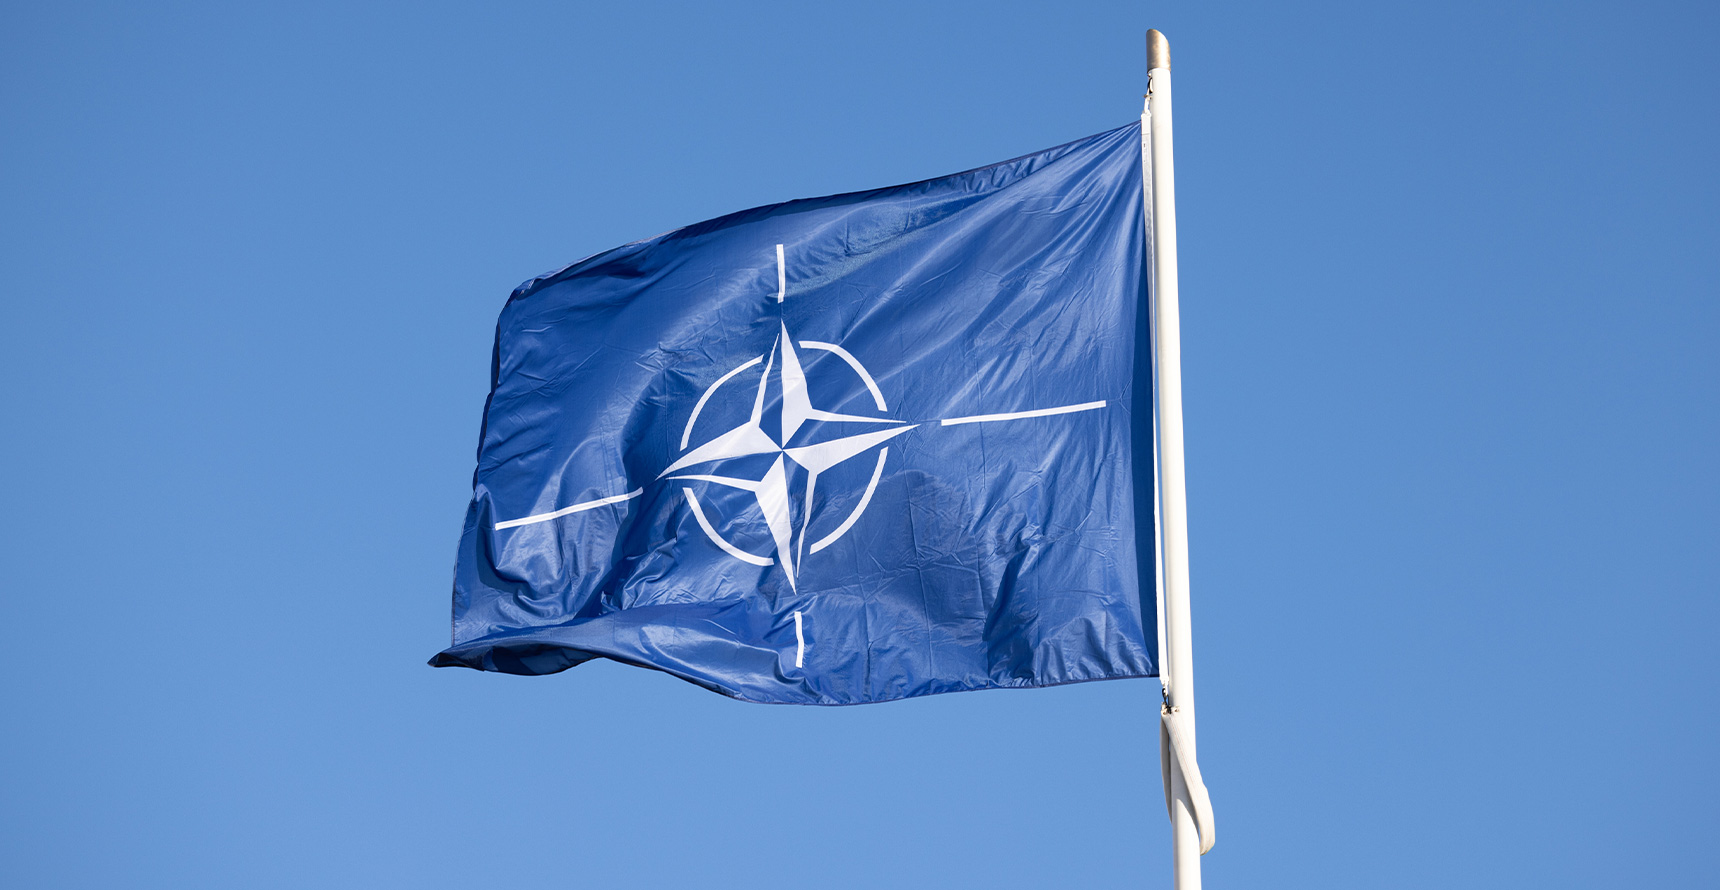 The NATO flag against a clear blue sky.